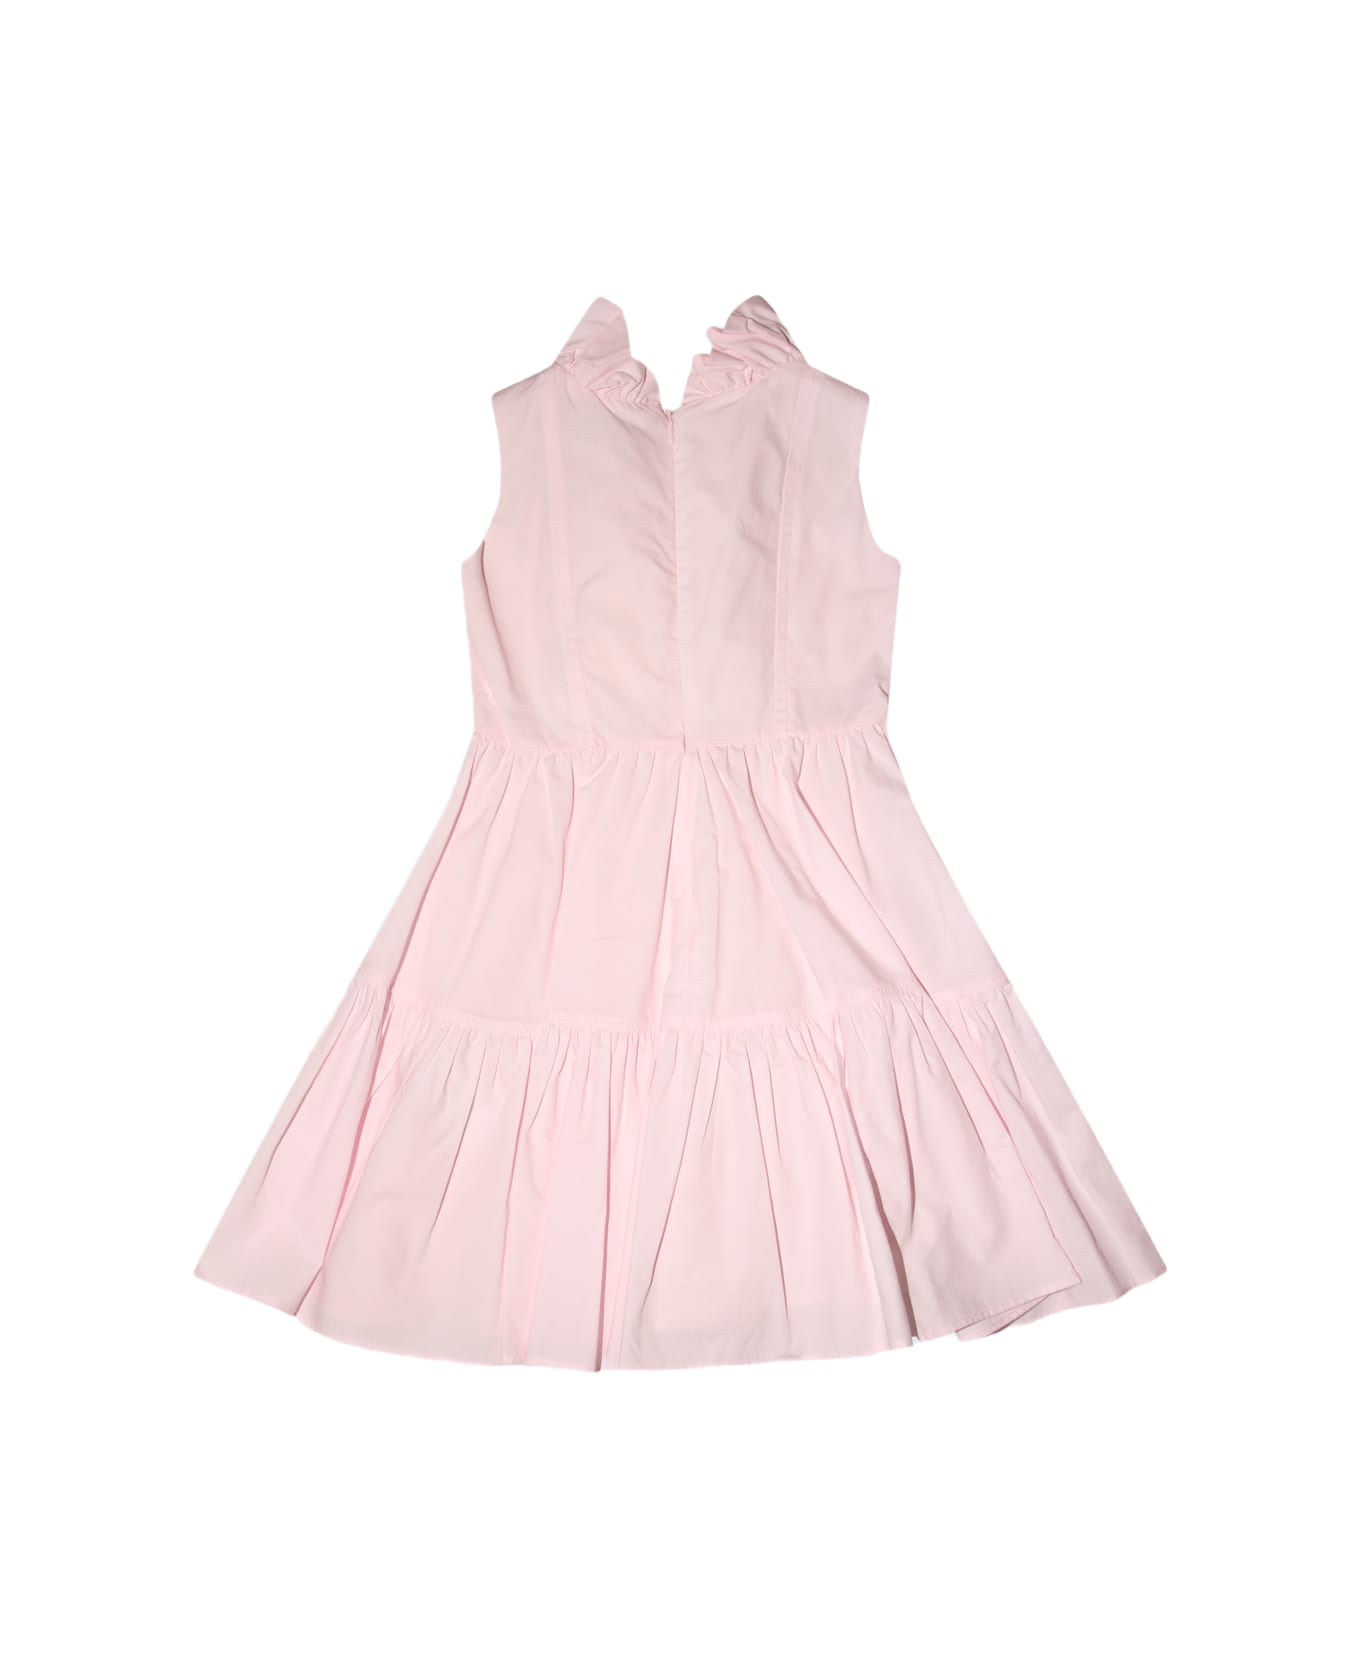 Monnalisa Antique Pink Cotton Dress - Pink